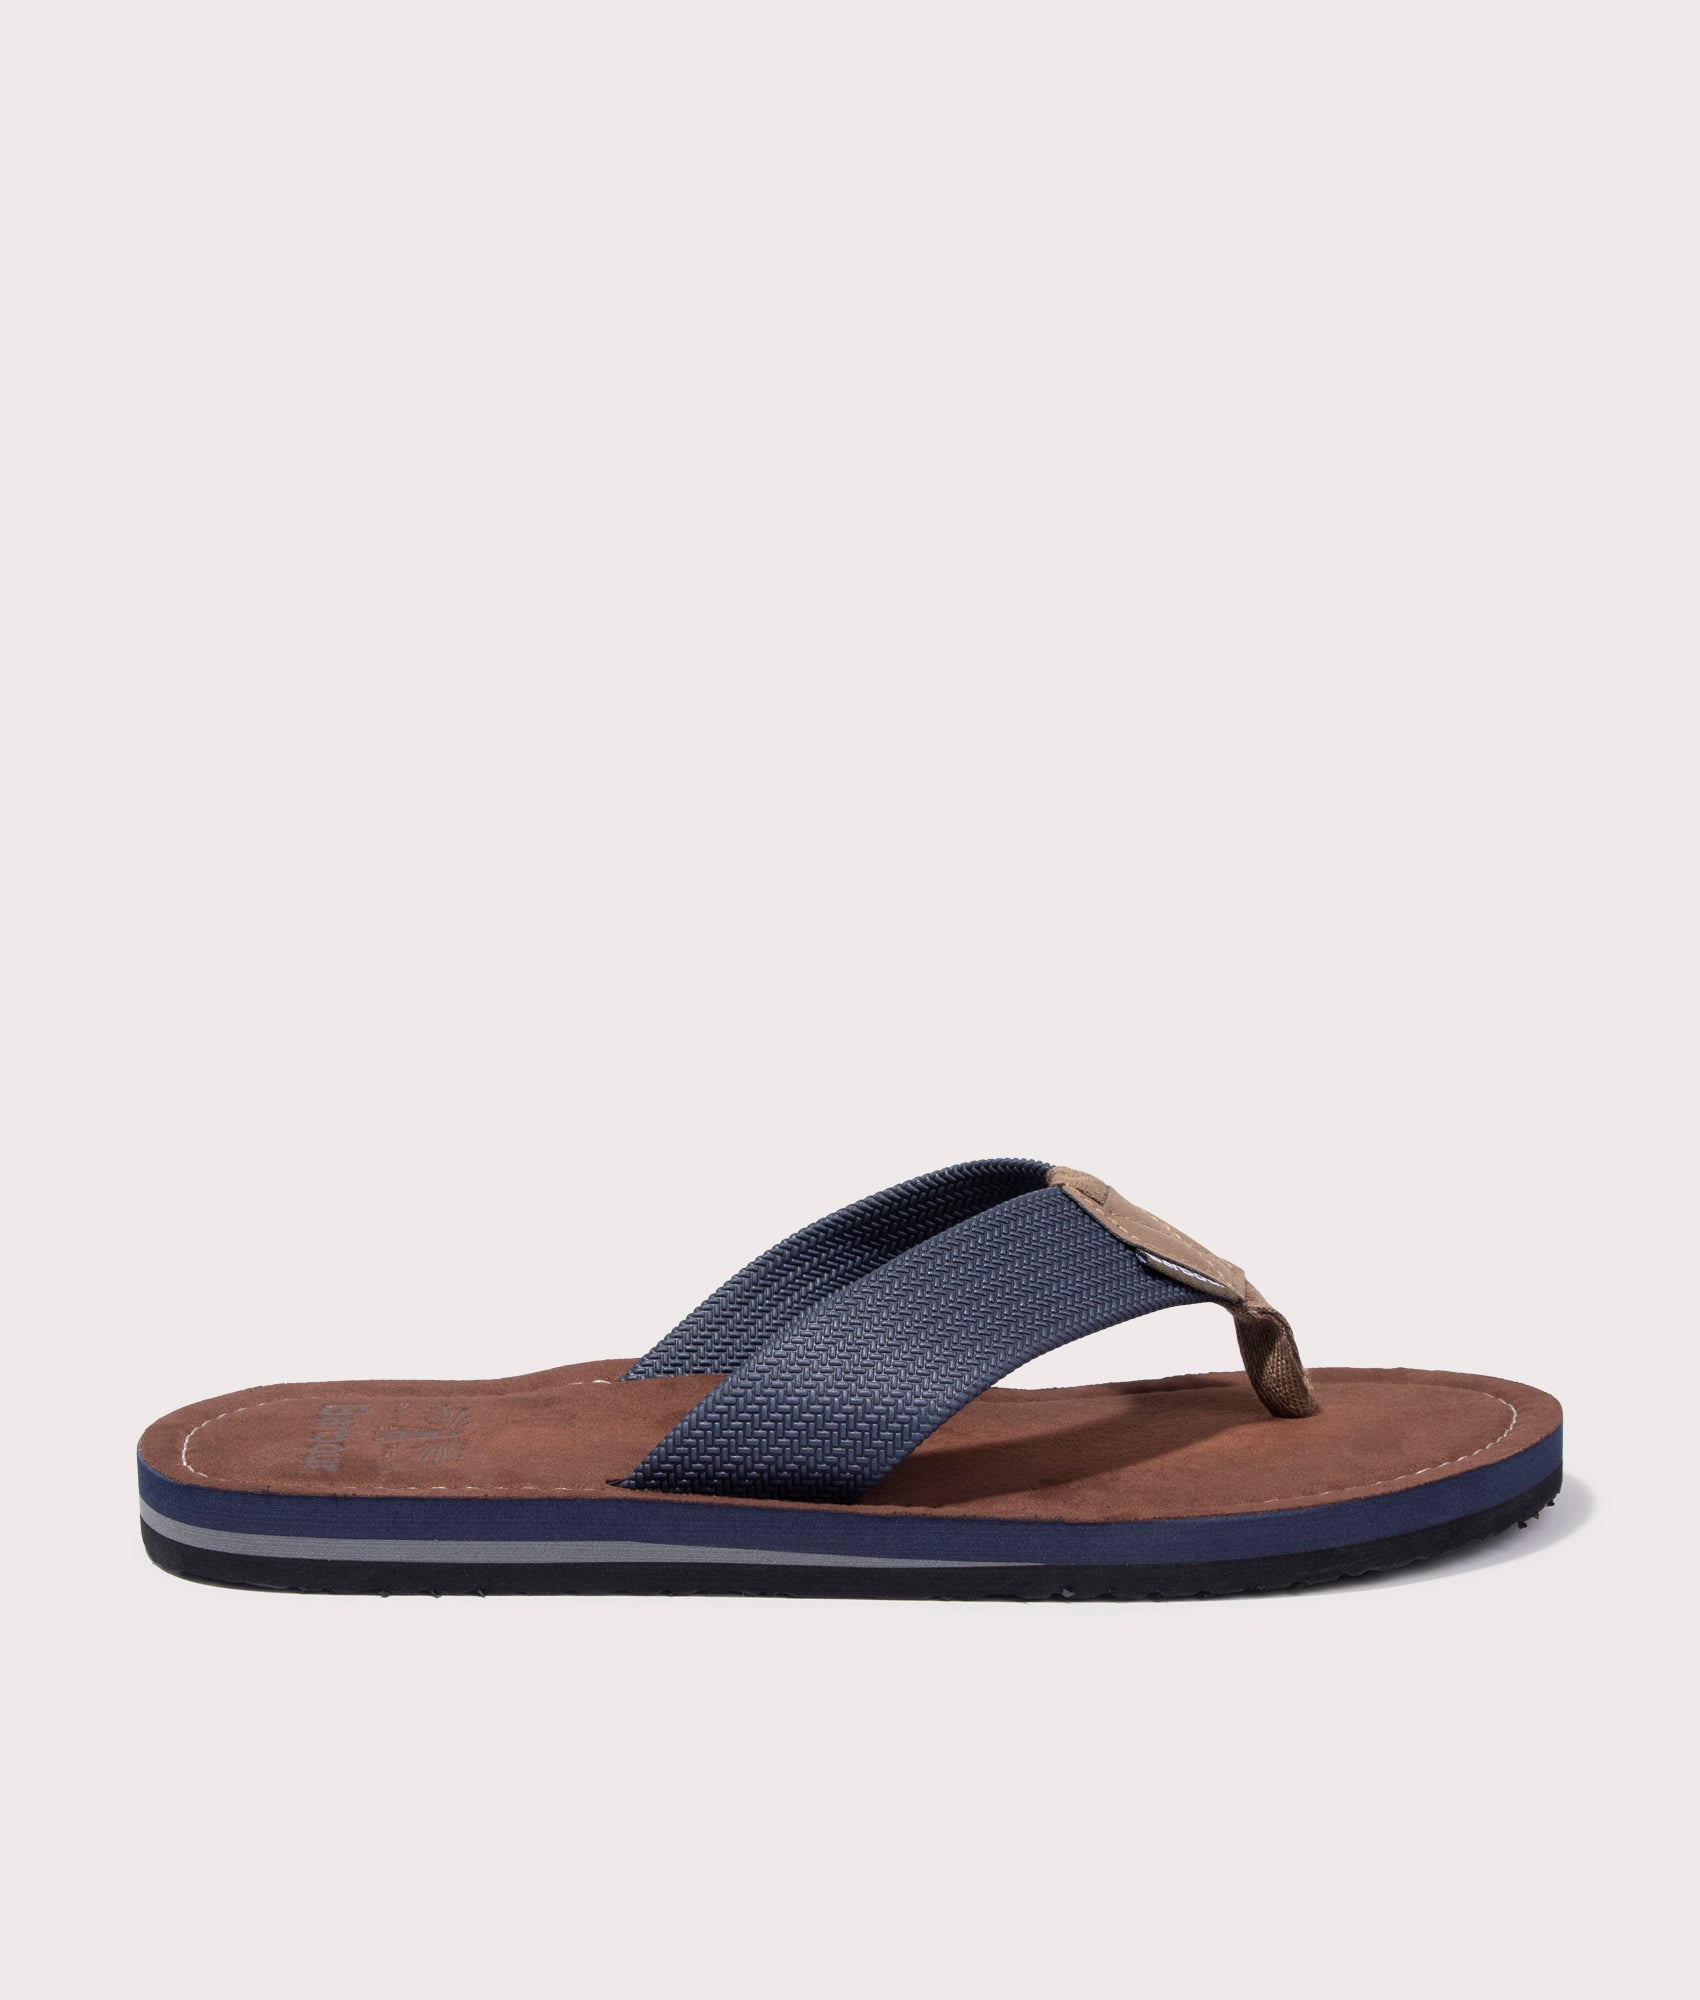 Barbour Lifestyle Mens Toeman Beach Sandals - Colour: NY98 Navy - Size: 10